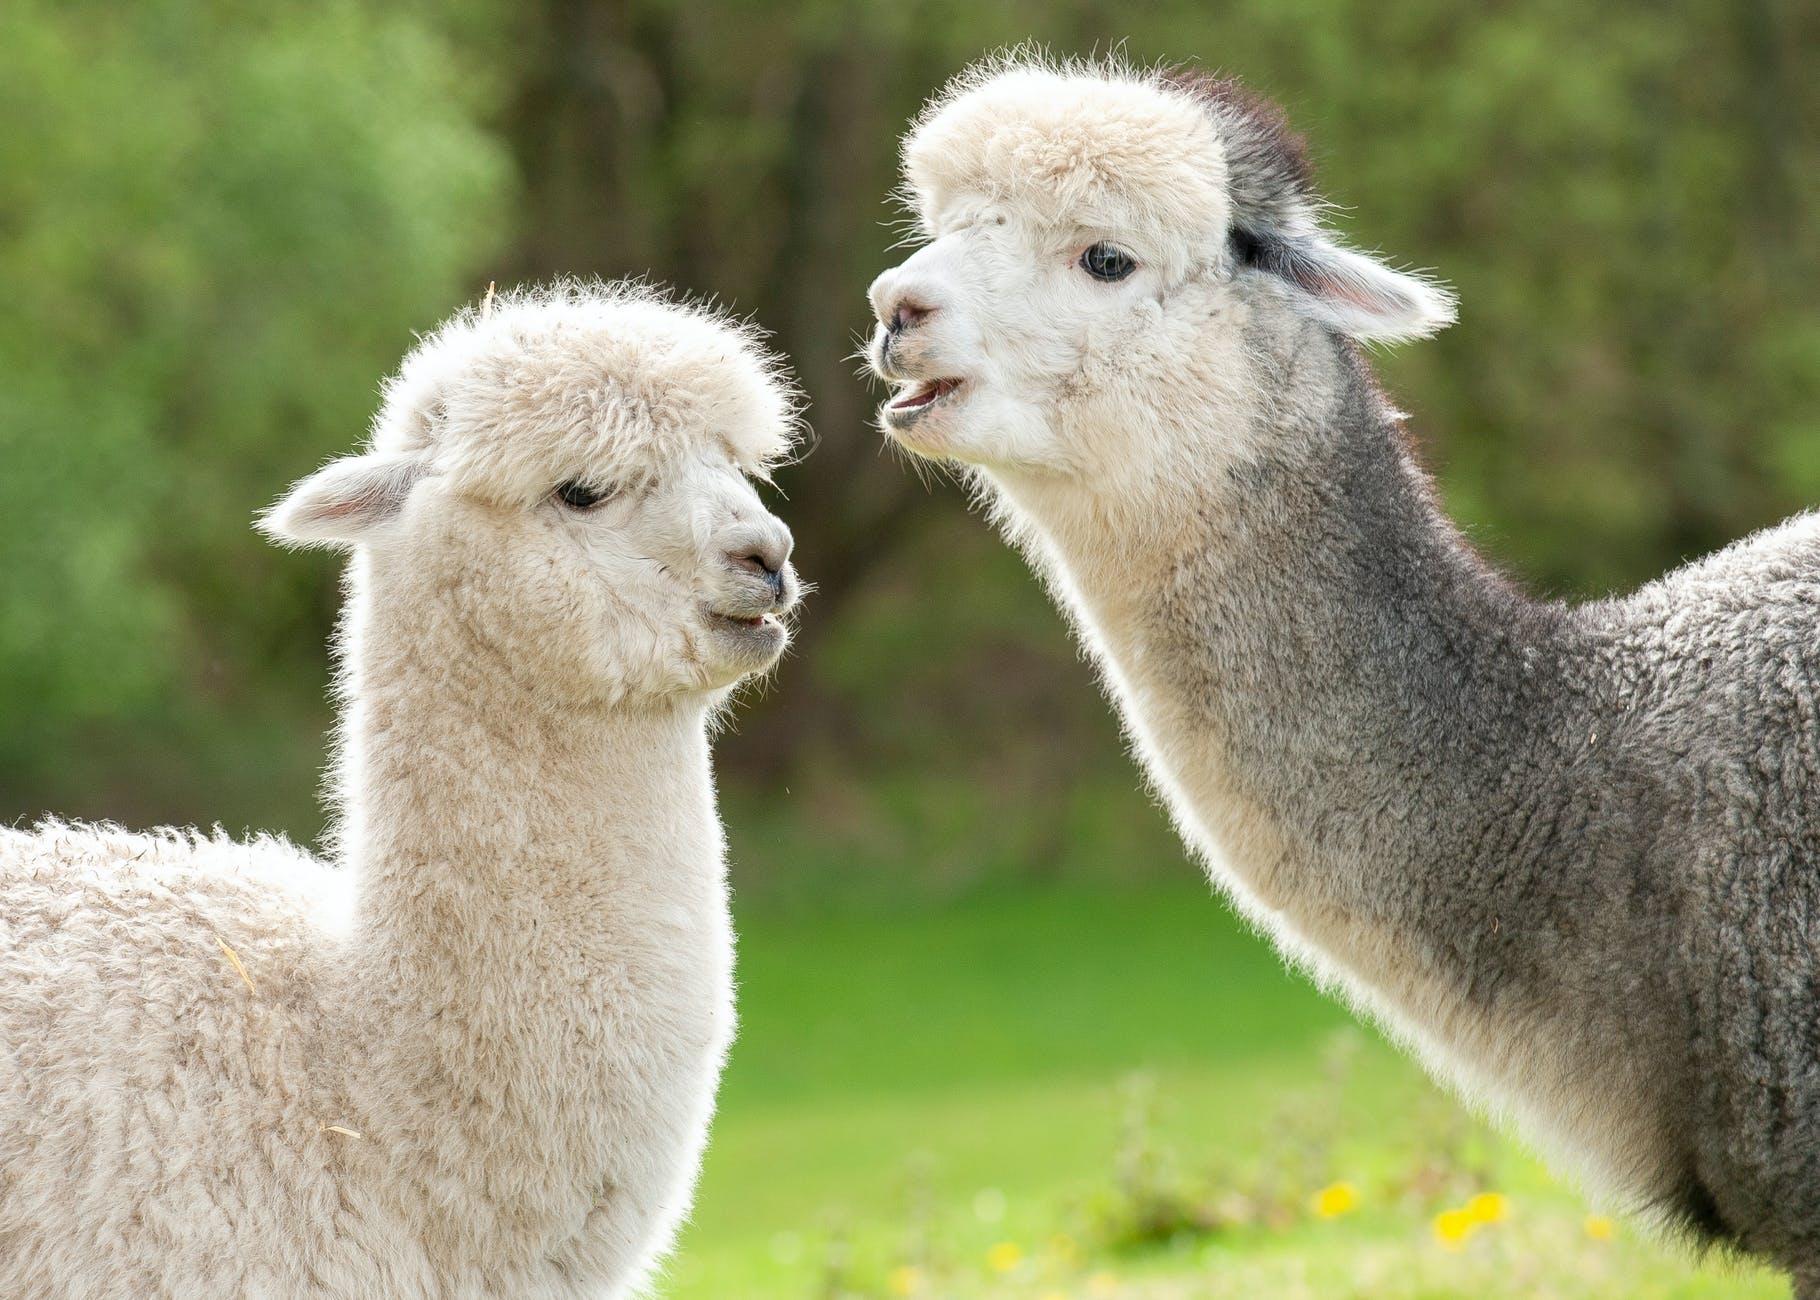 an adorable white and gray llamas